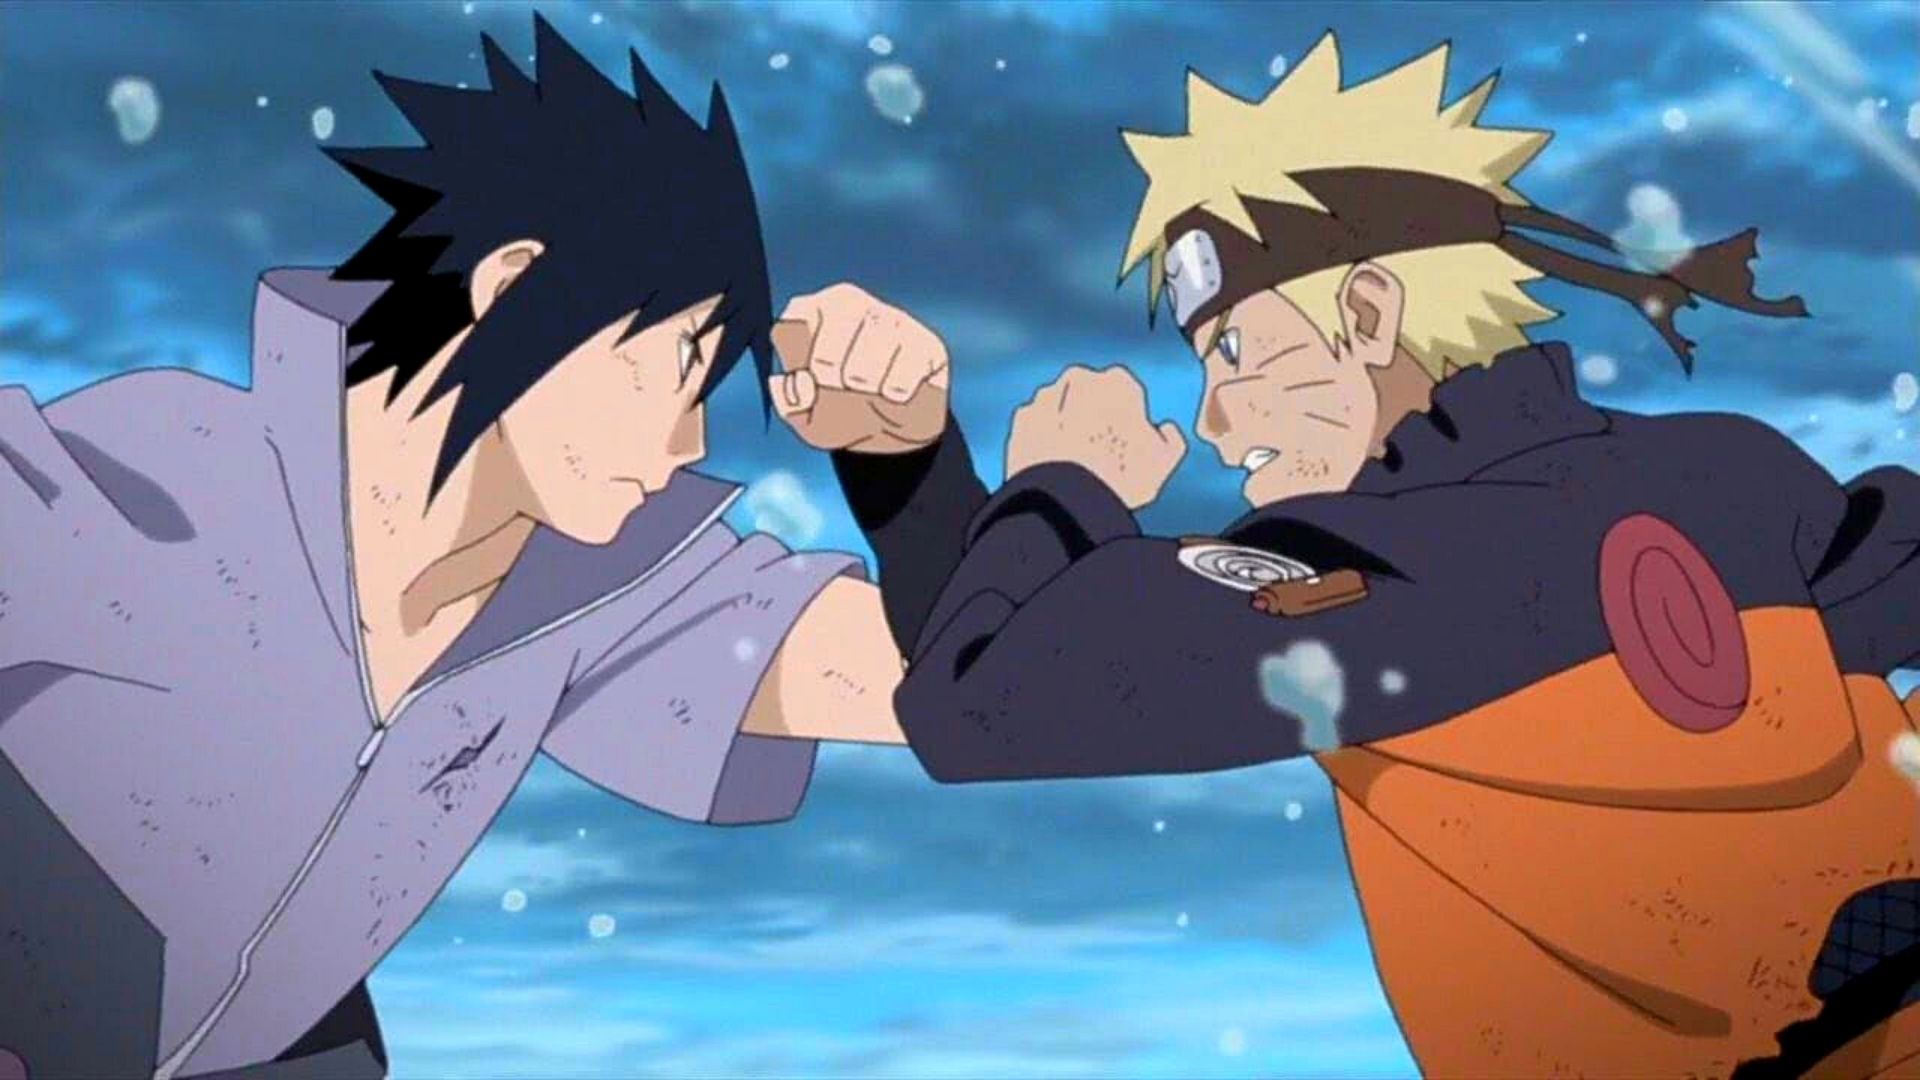 combat final naruto vs sasuke episode